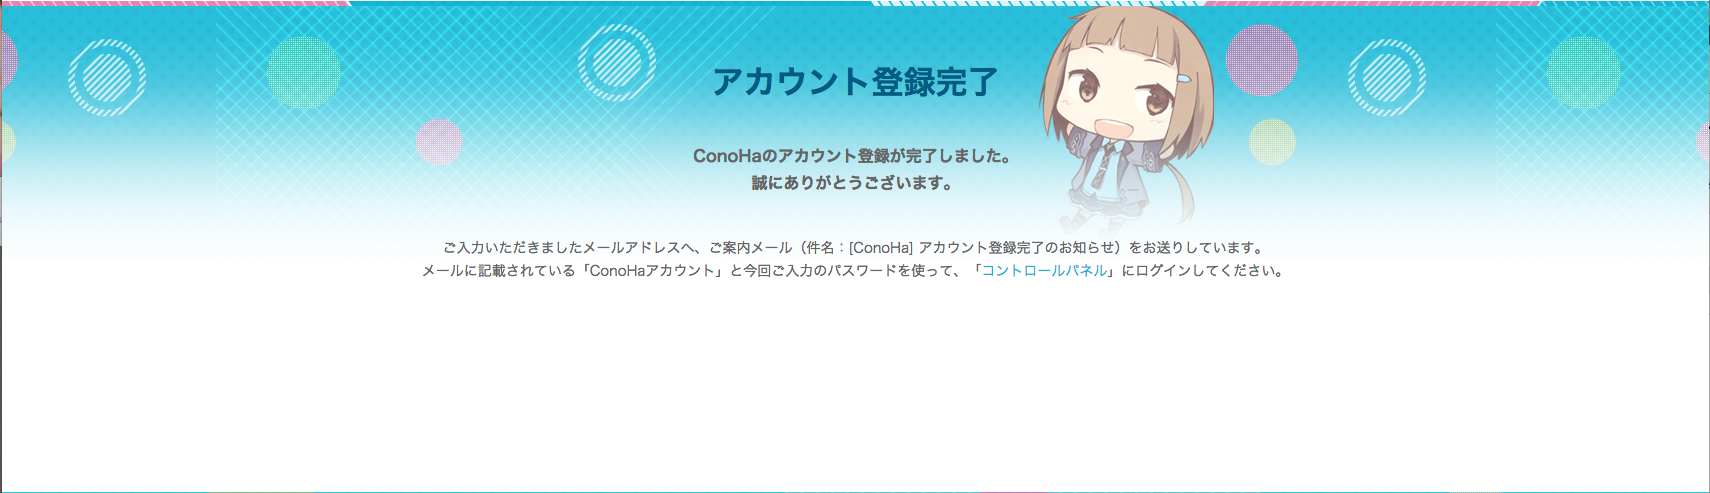 ConoHa:登録完了